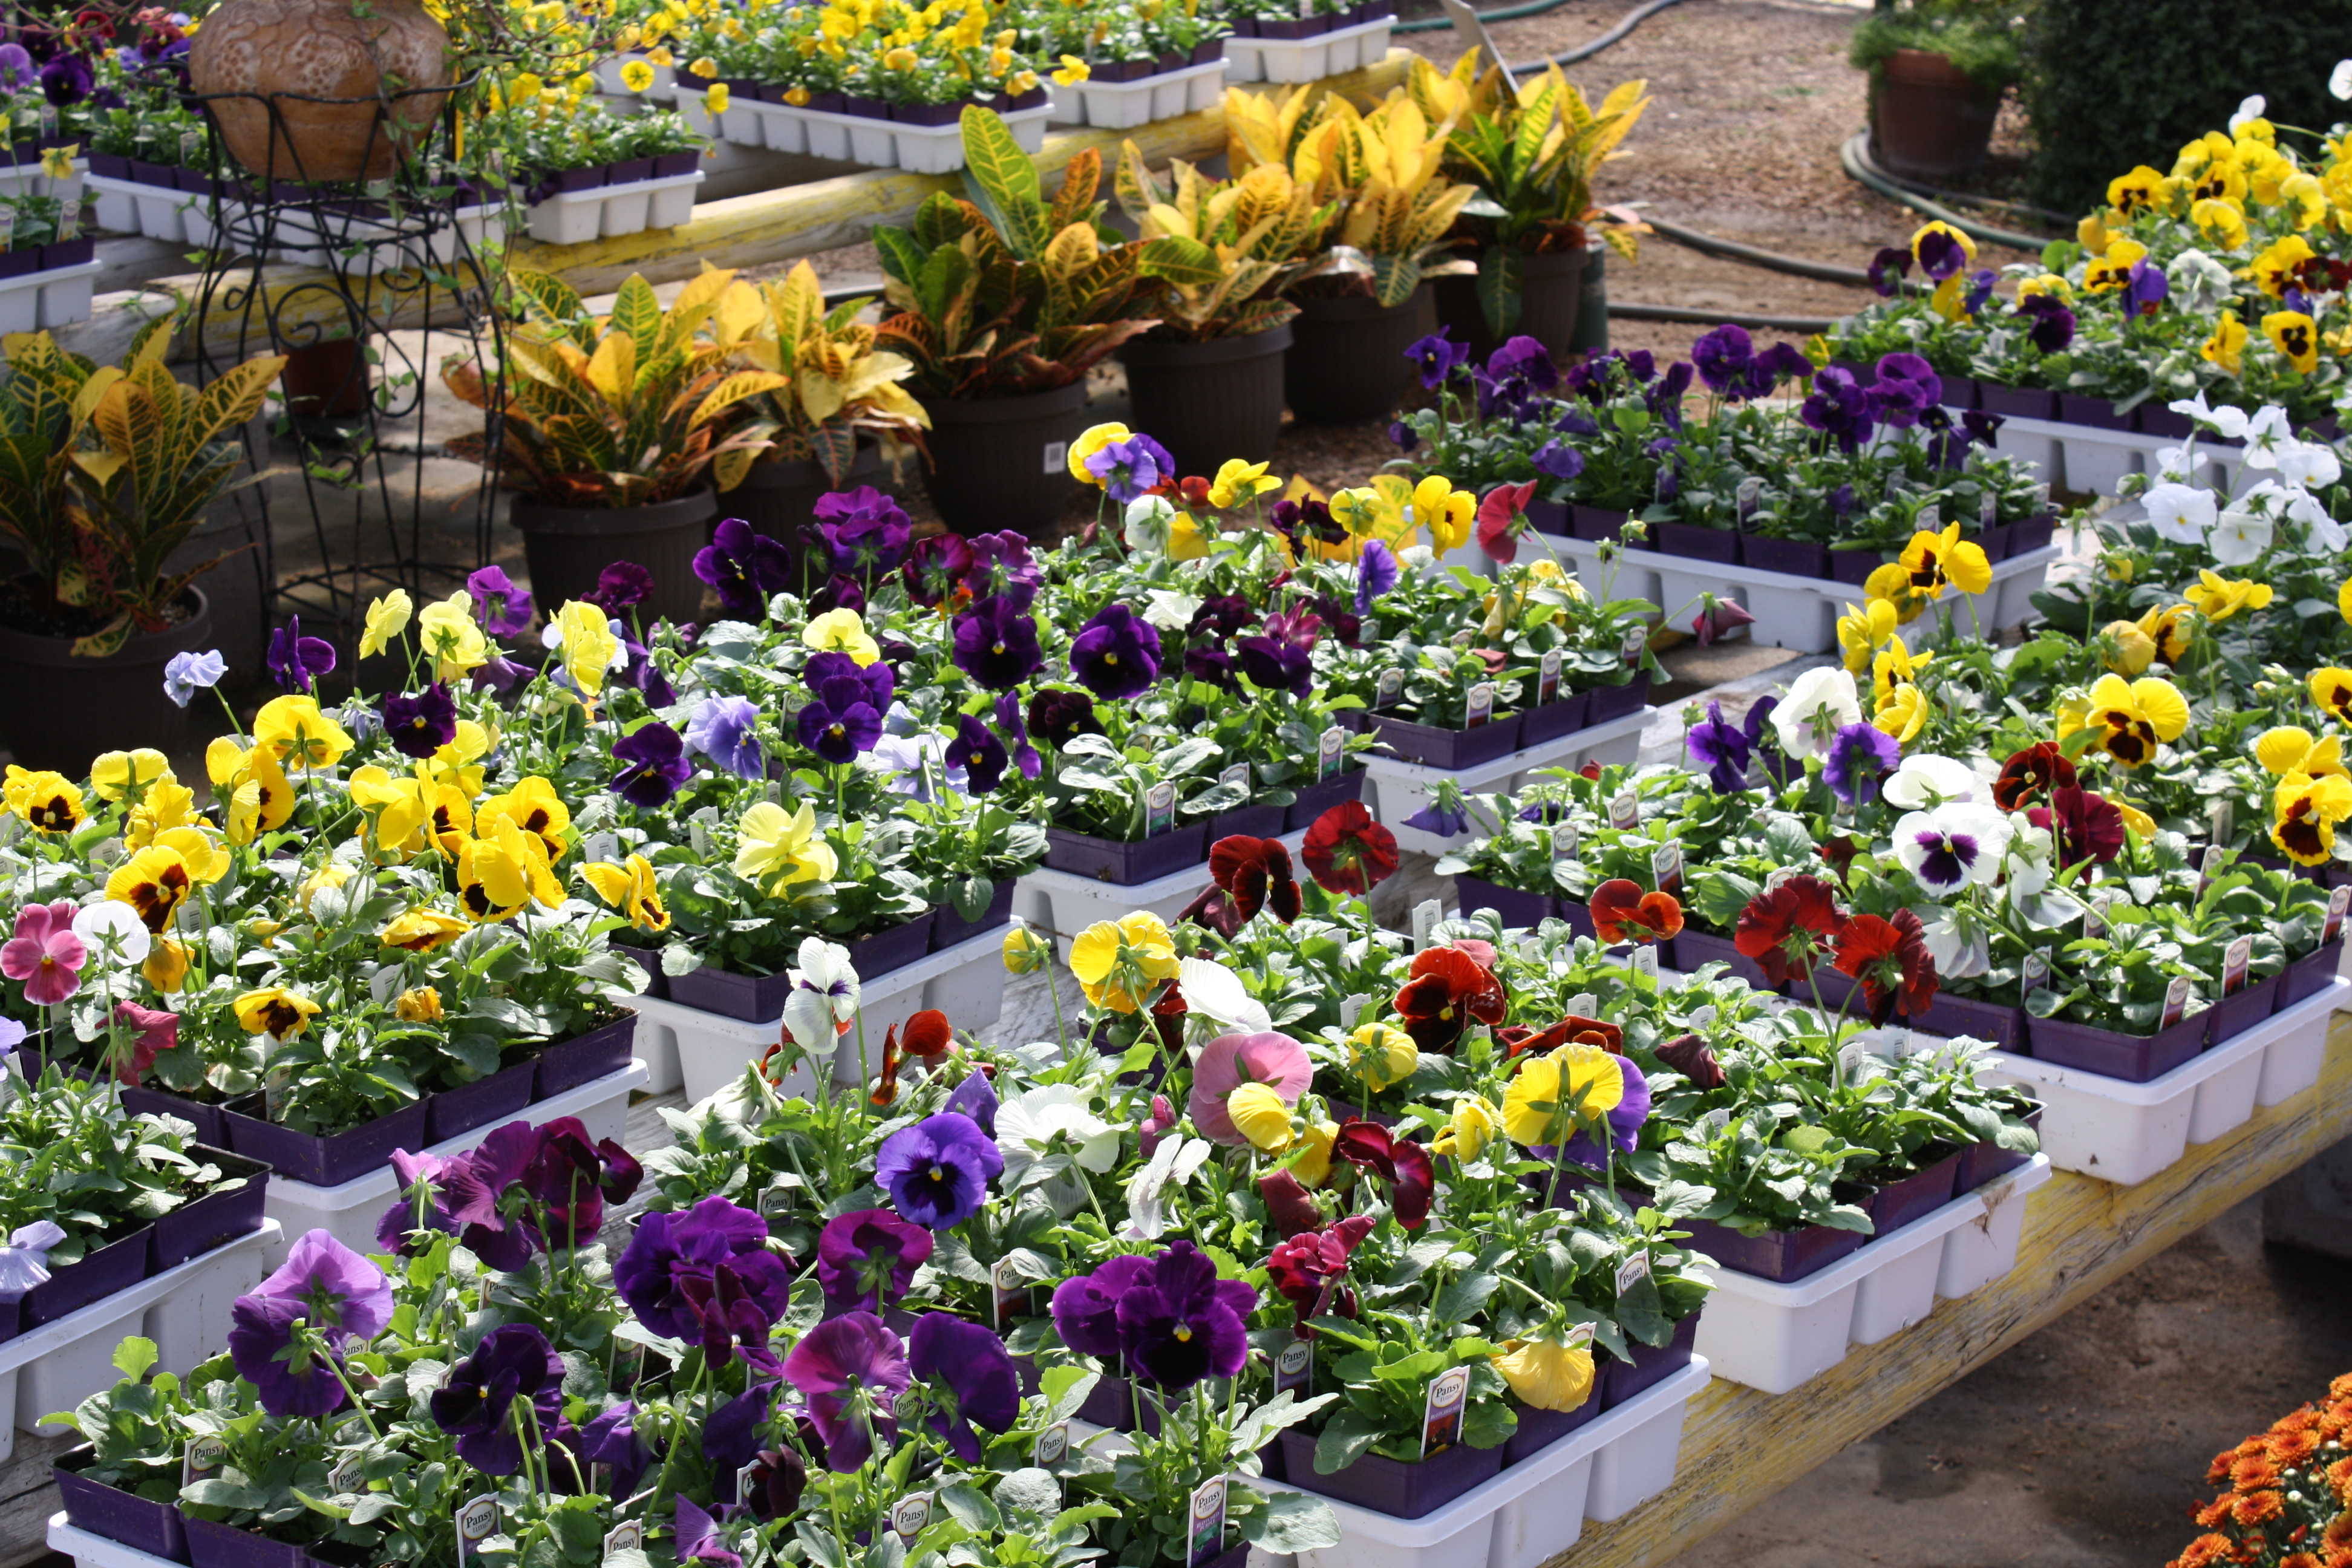 Plants, Herbs and Vegetables at J&J Nursery, Spring, TX.